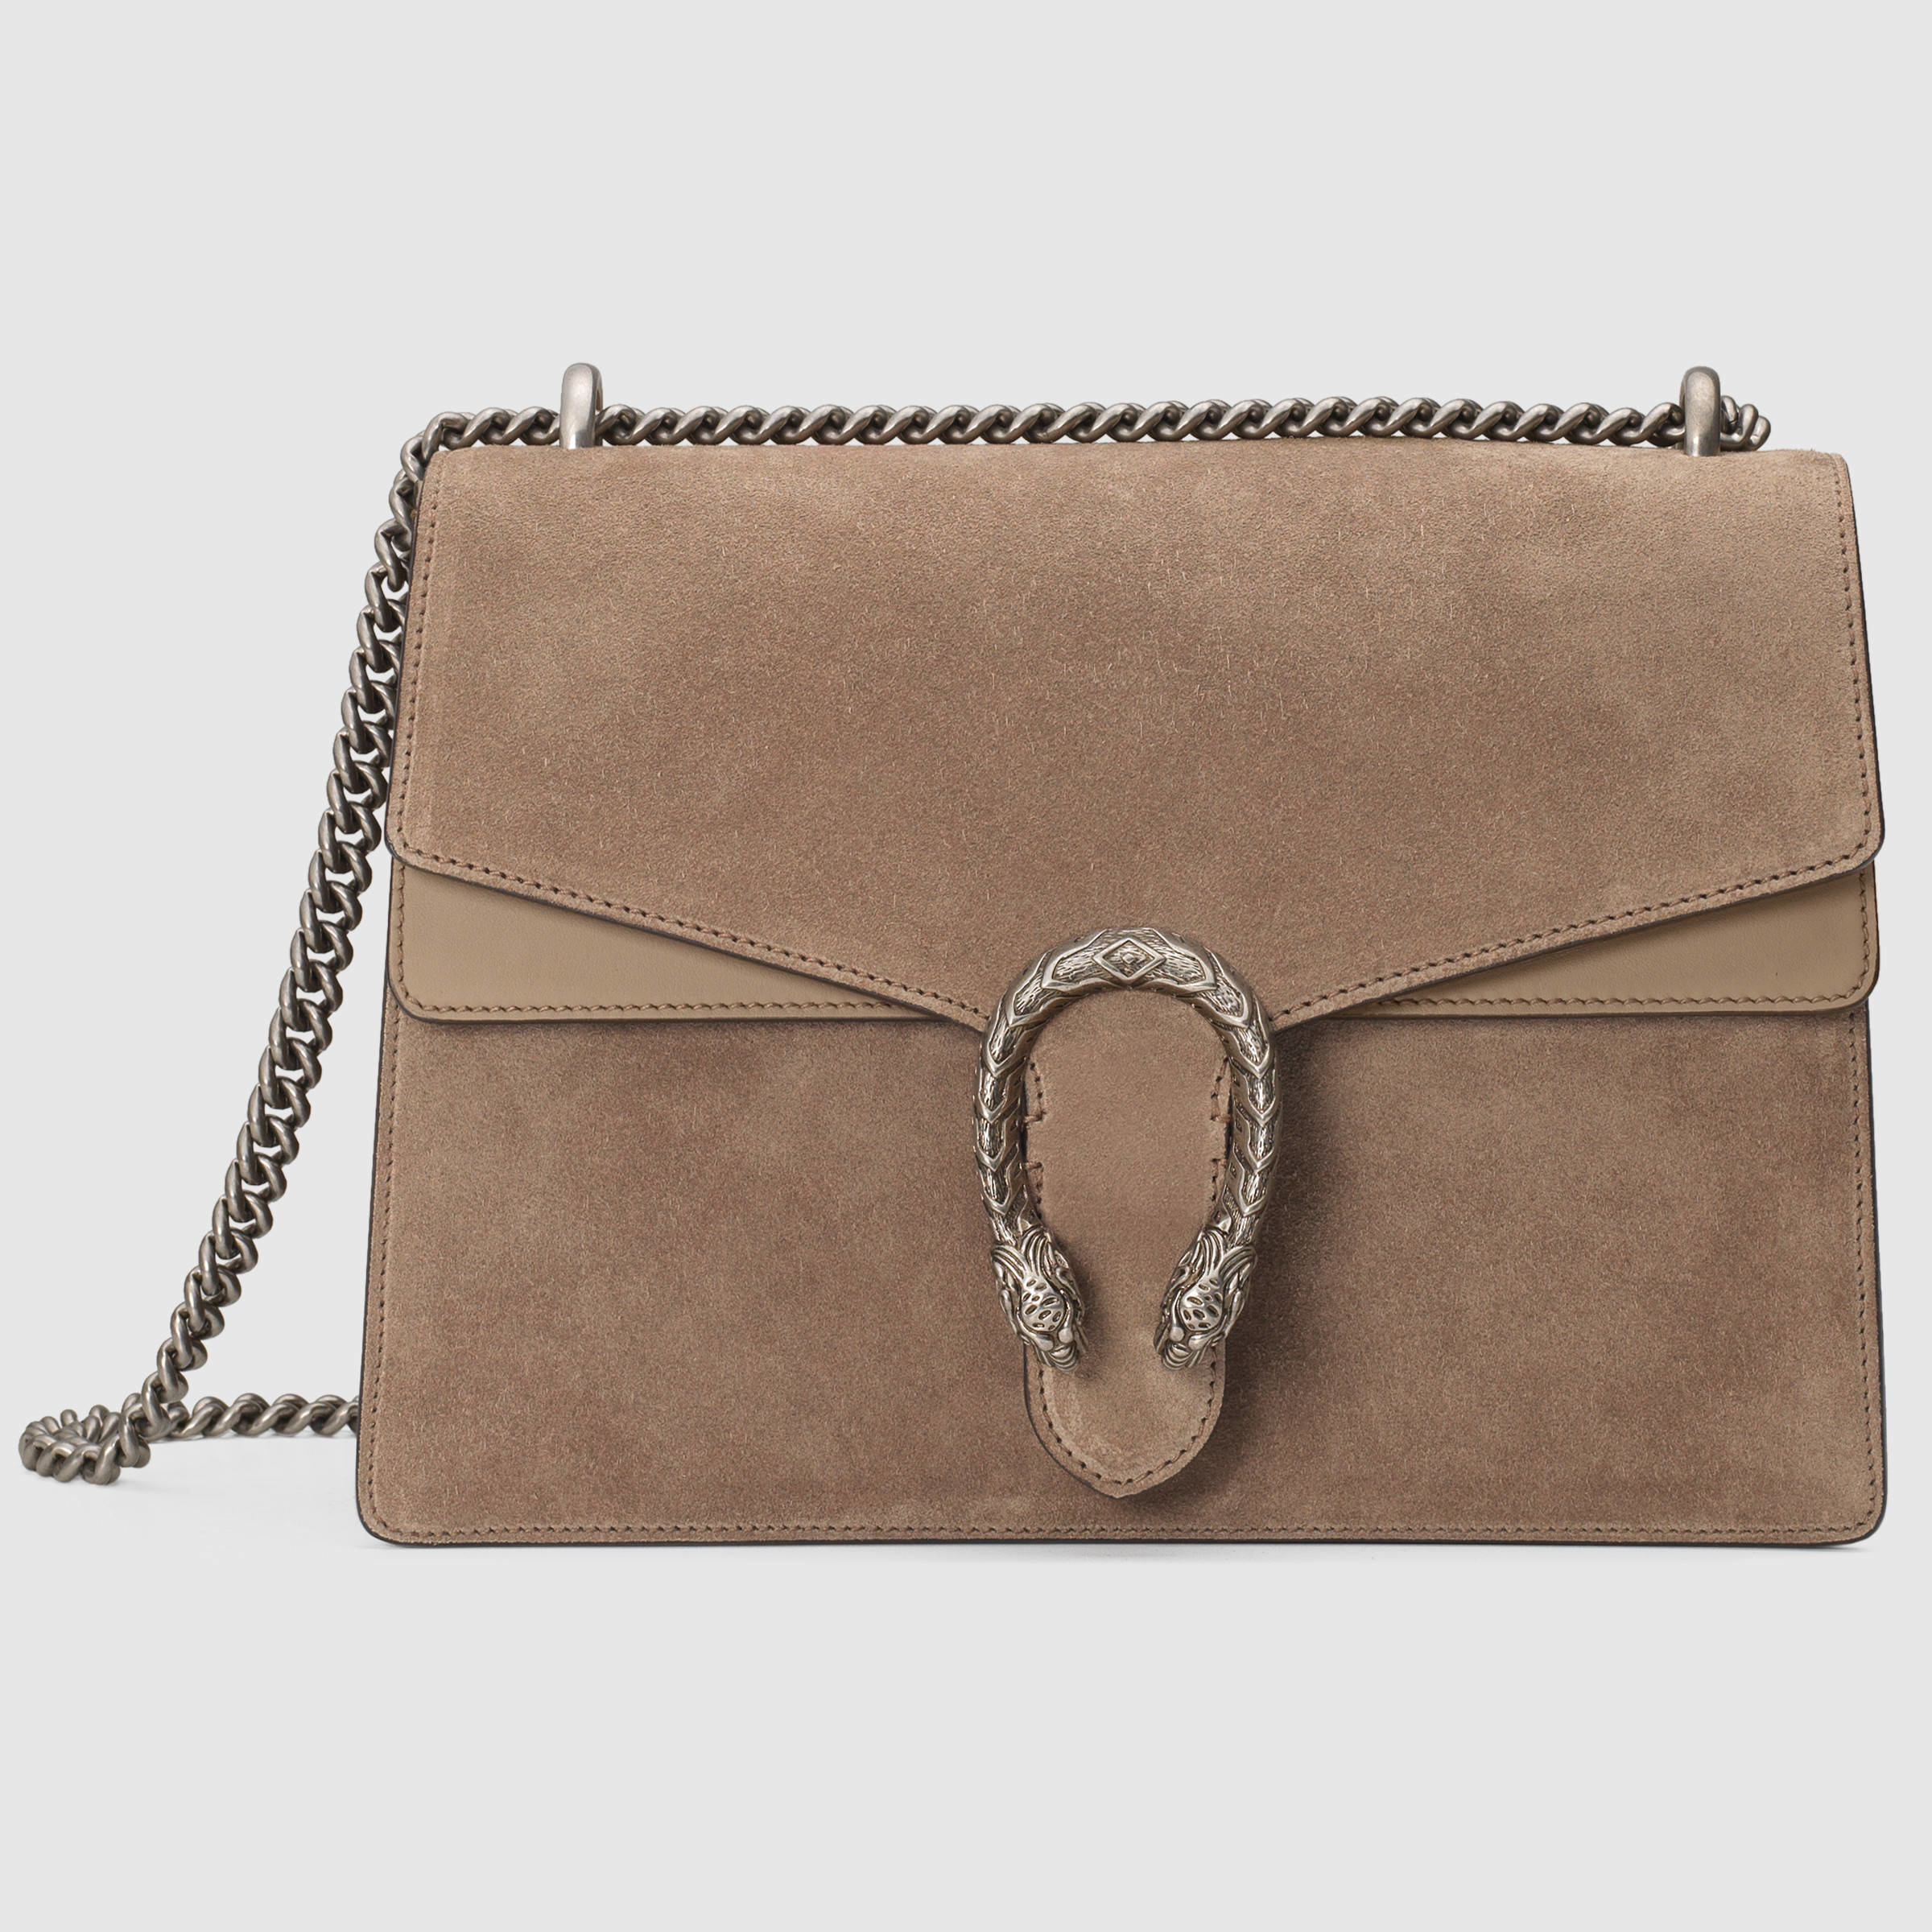 Gucci Dionysus Suede Shoulder Bag in Taupe Suede (Brown) | Lyst